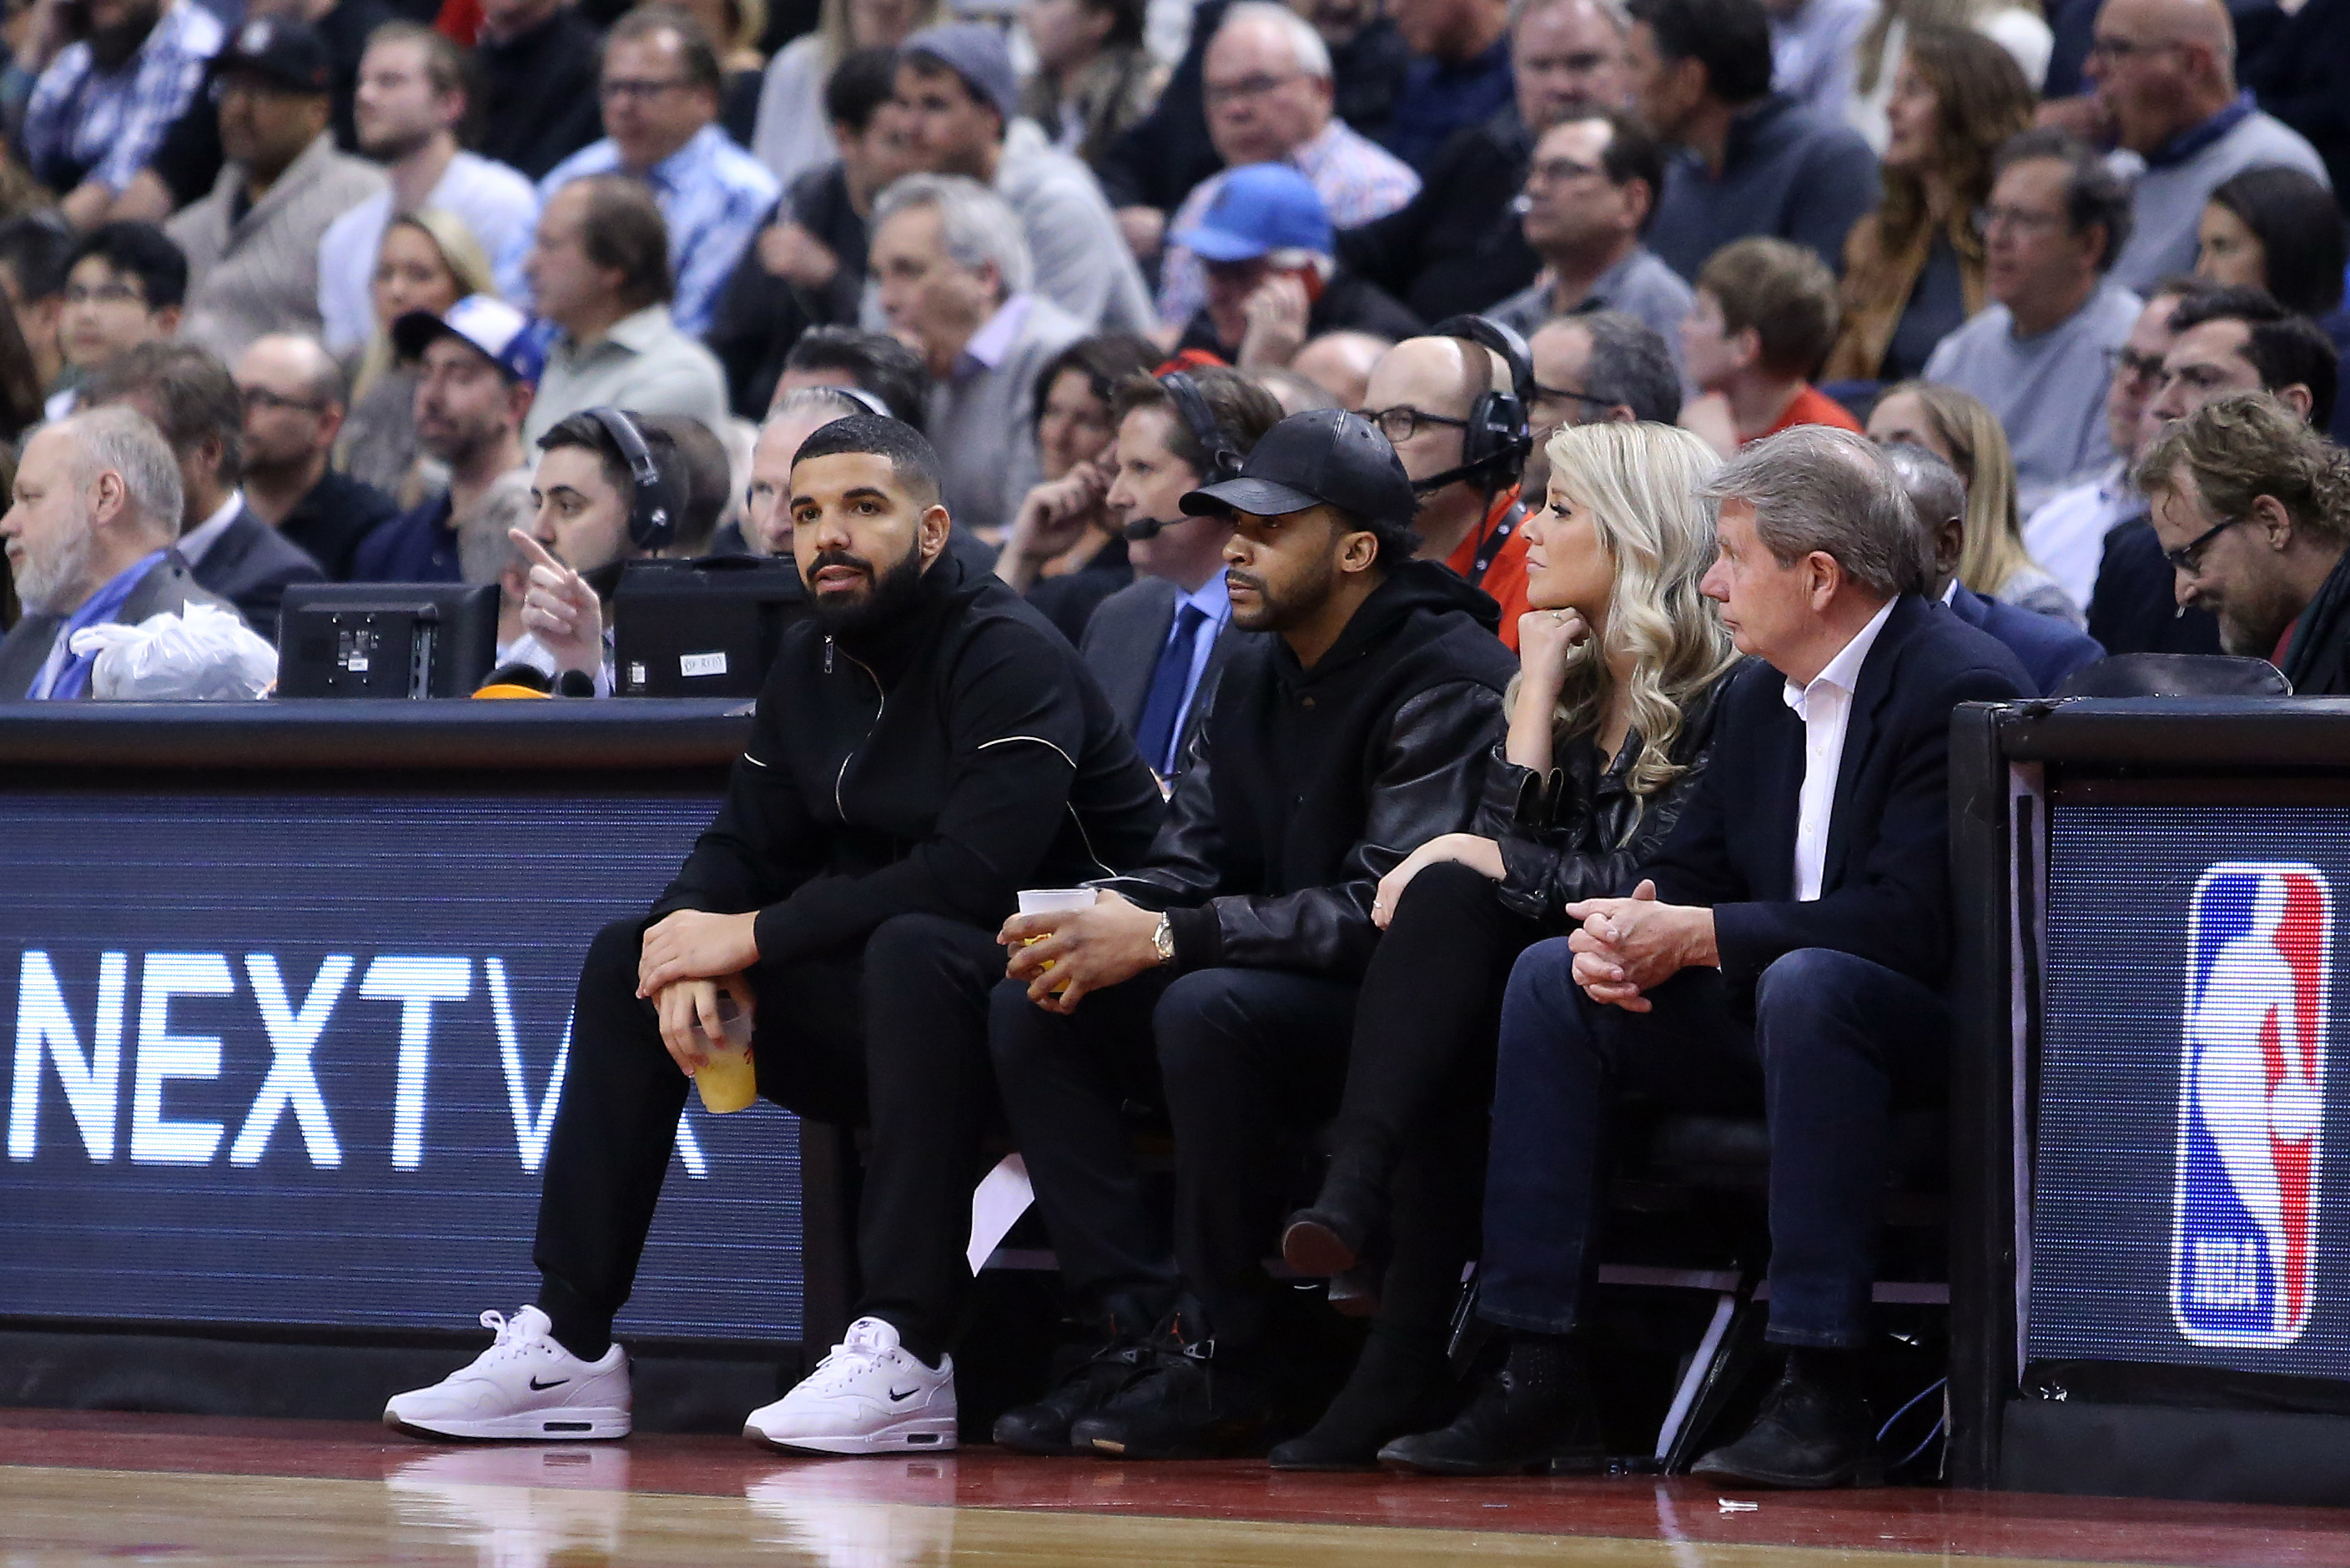 Drake wears Humboldt Broncos jersey to Raptors' playoff opener